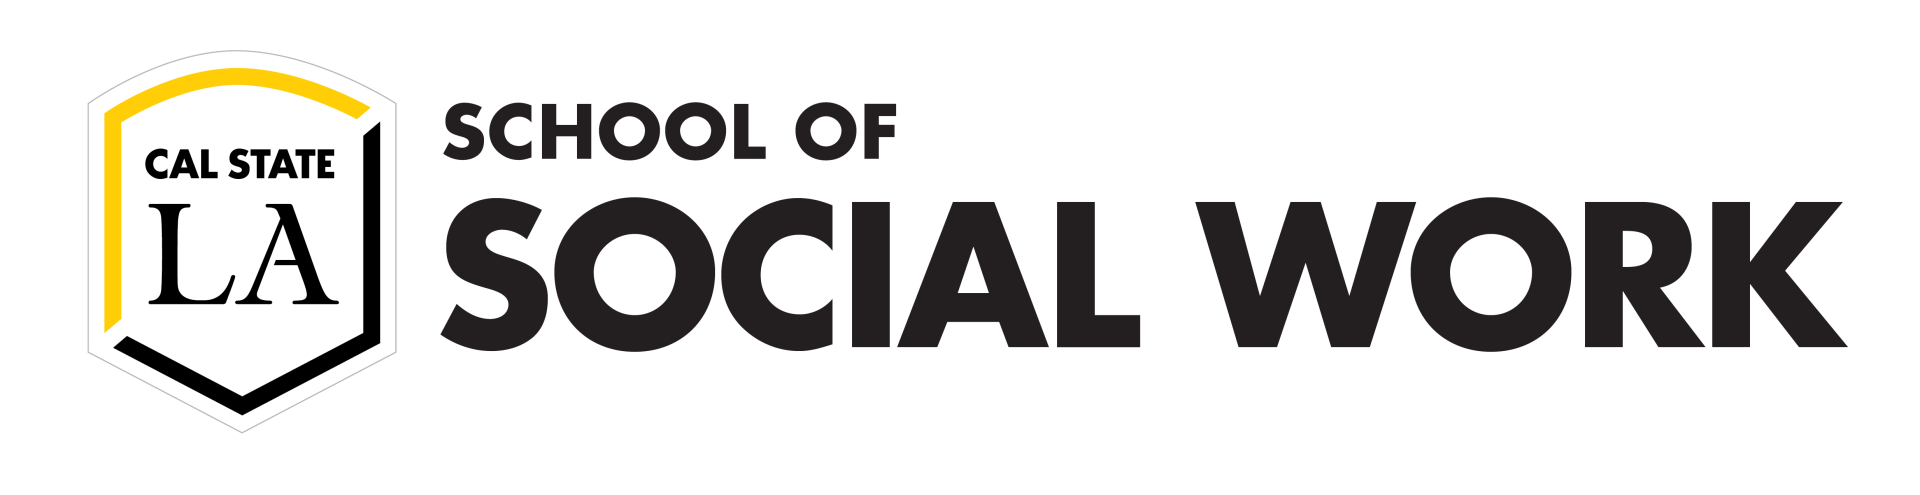 School of Social Work logo 